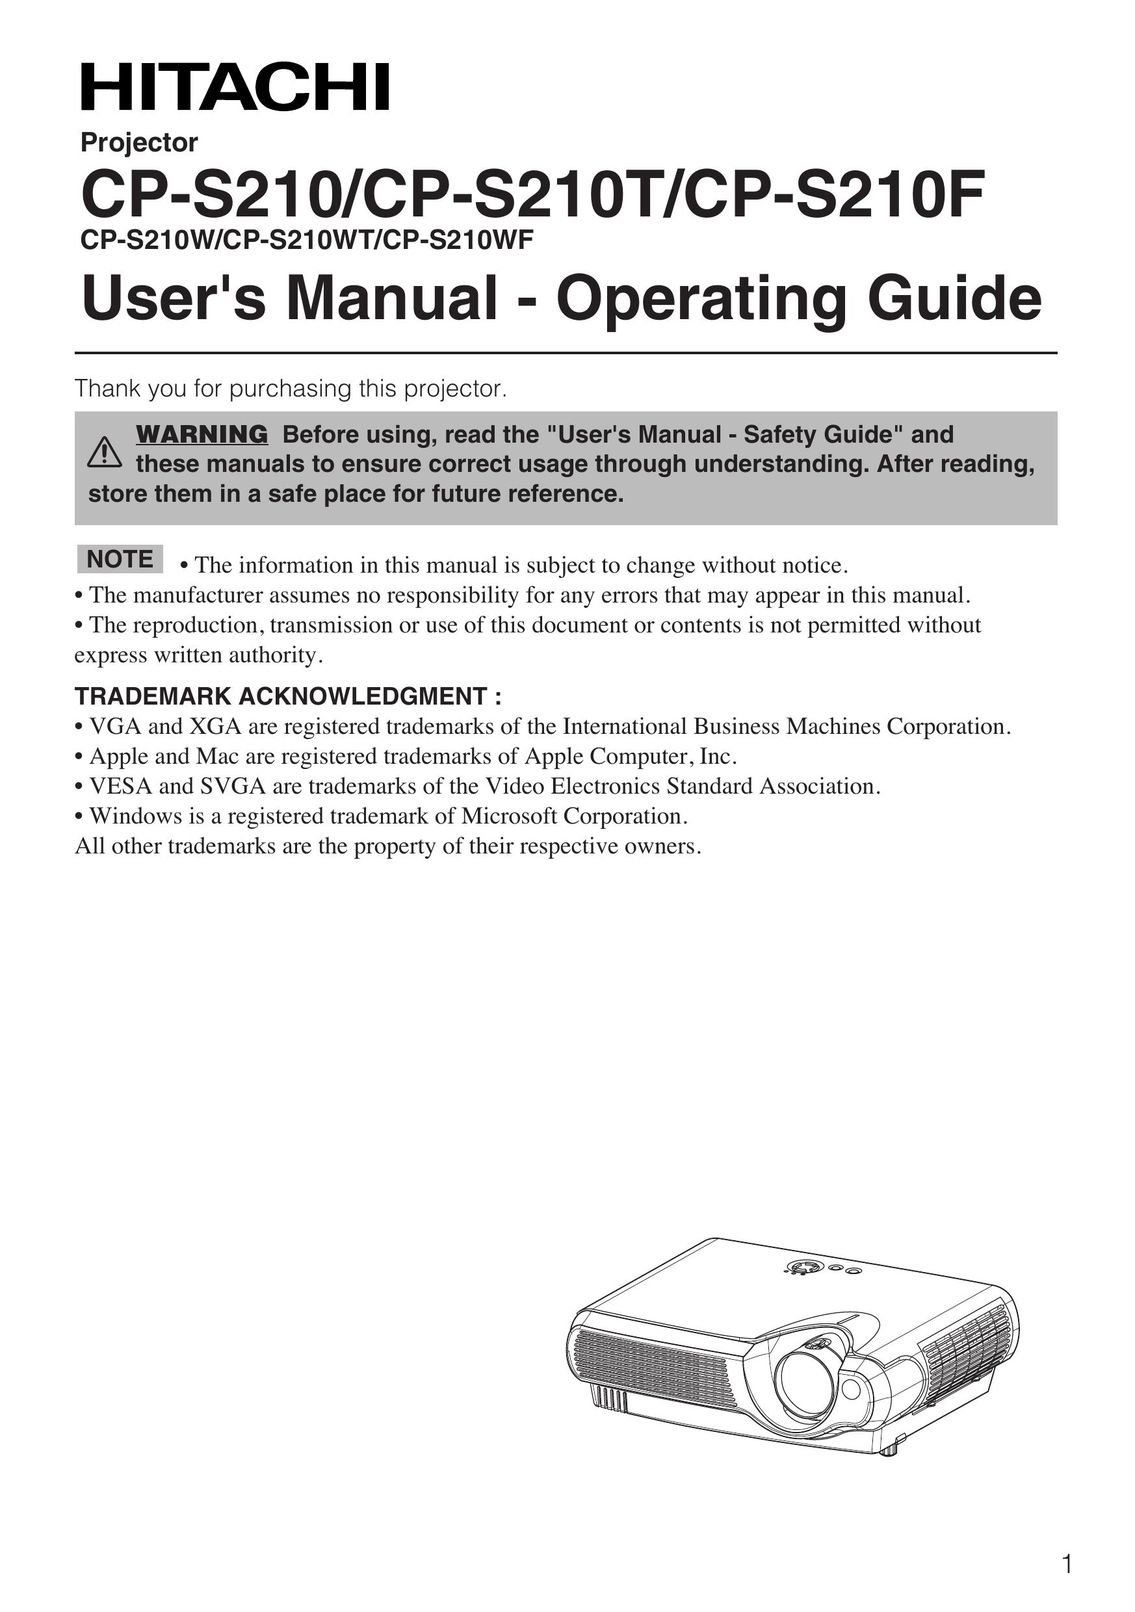 Hitachi CP-S210 Projector User Manual